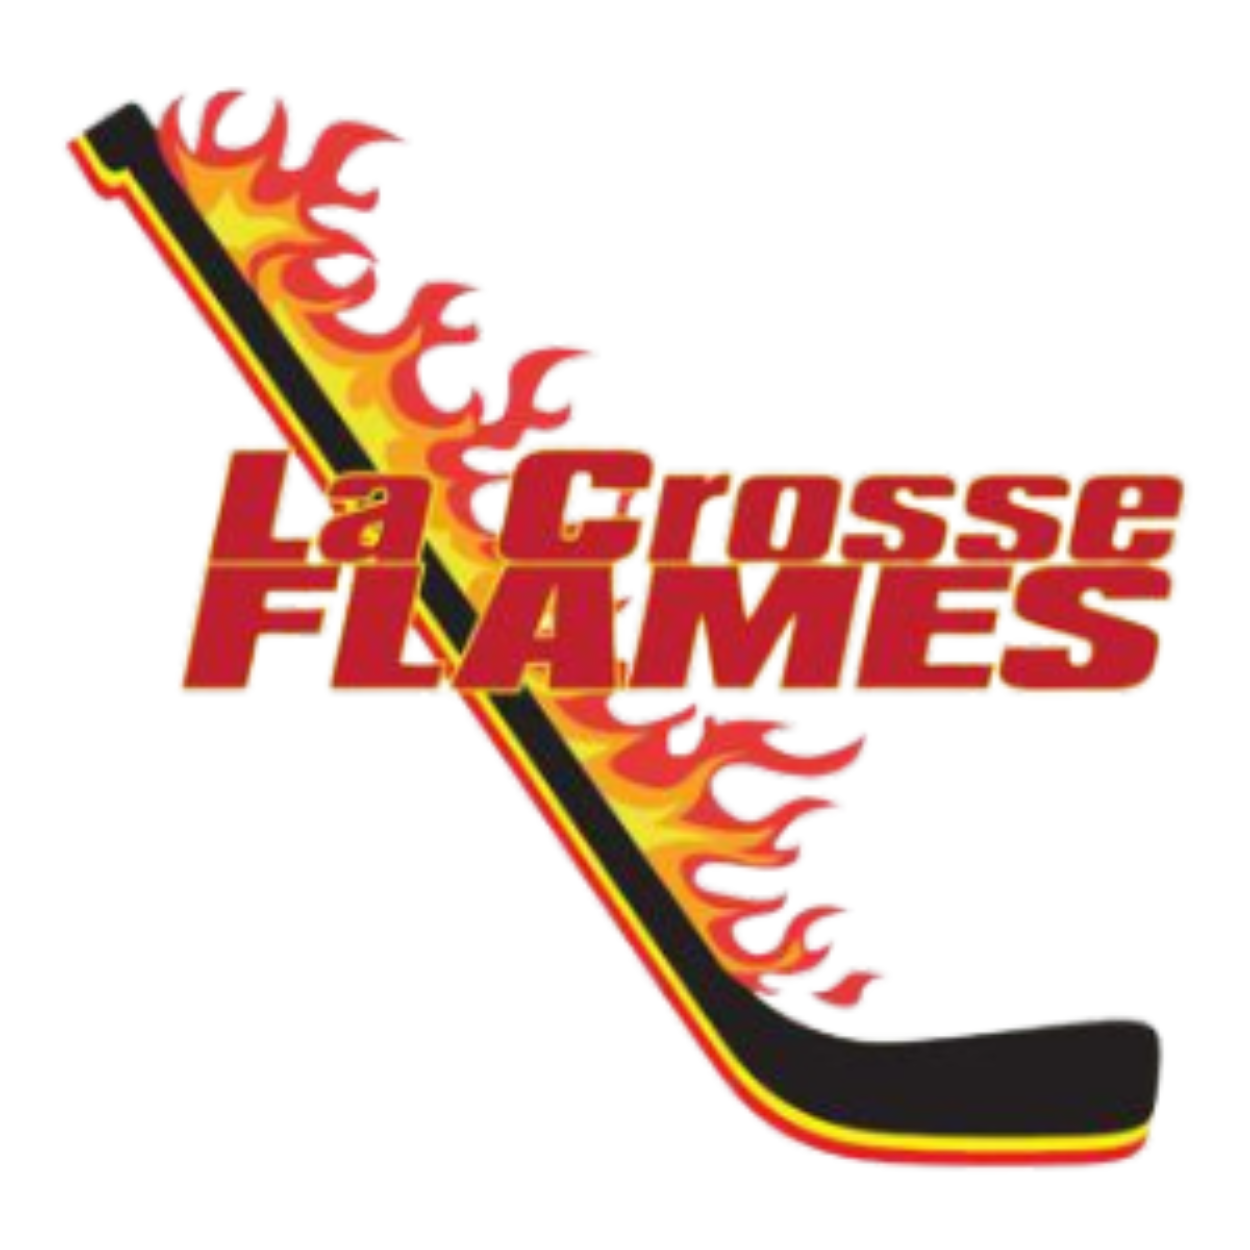 LA CROSSE FLAMES HOCKEY – Gameday Supply llc